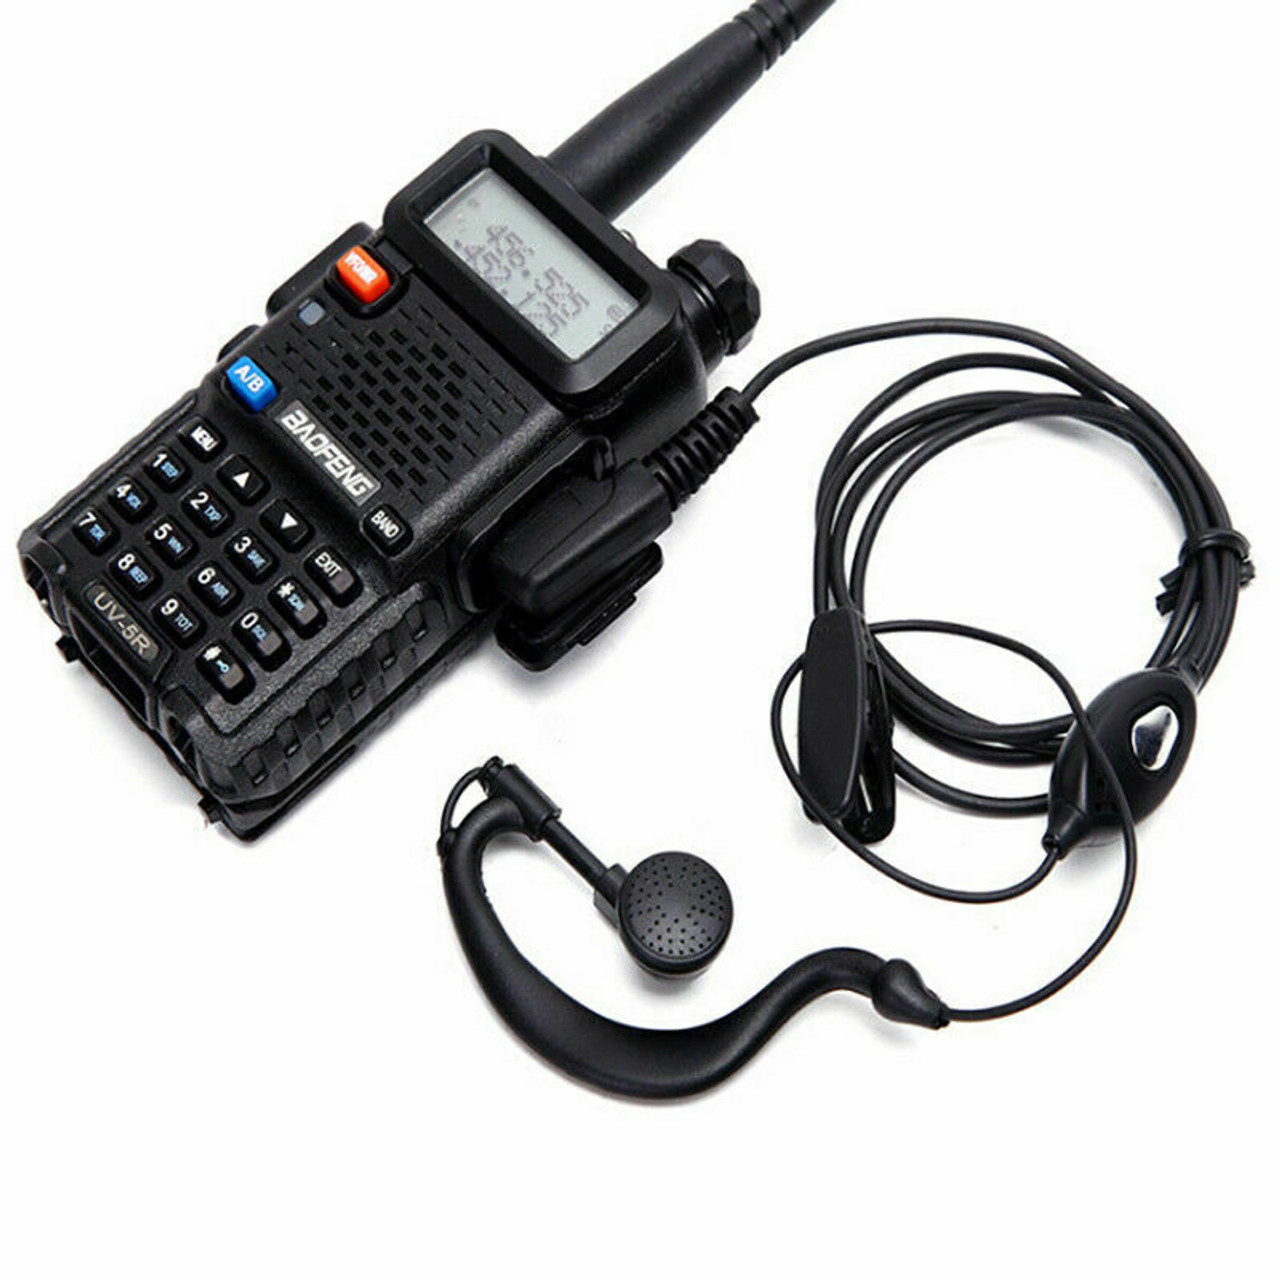 4X 2Pin Headset Earpiece Mic For Baofeng UV-5R UV-82 BF-888s Radio